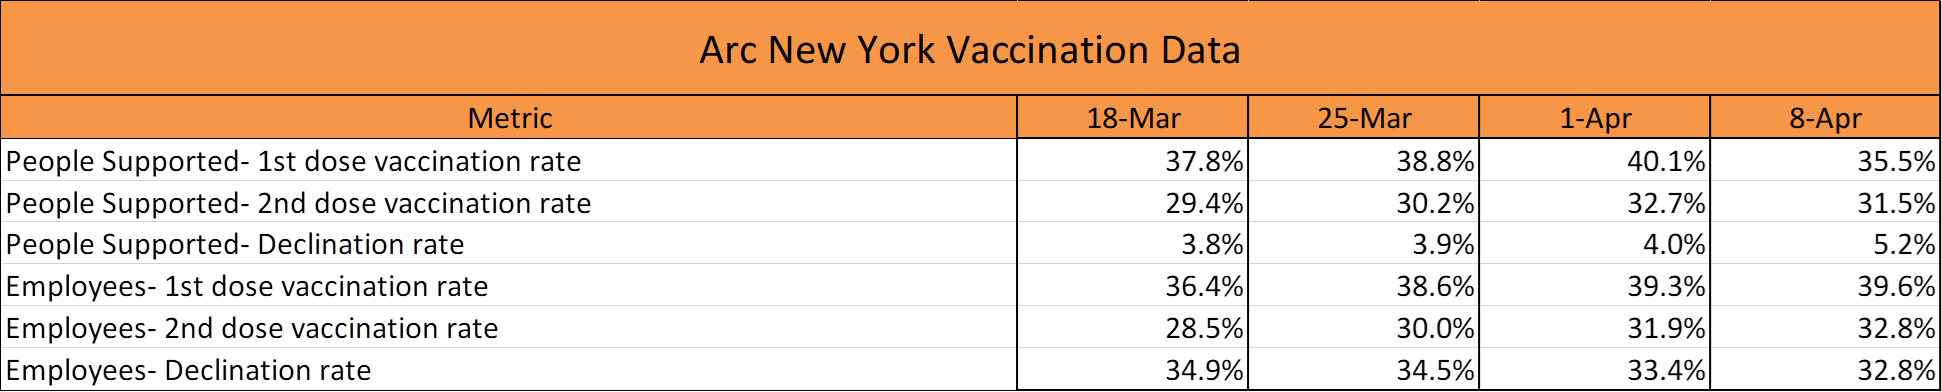 Arc New York Vaccination Data